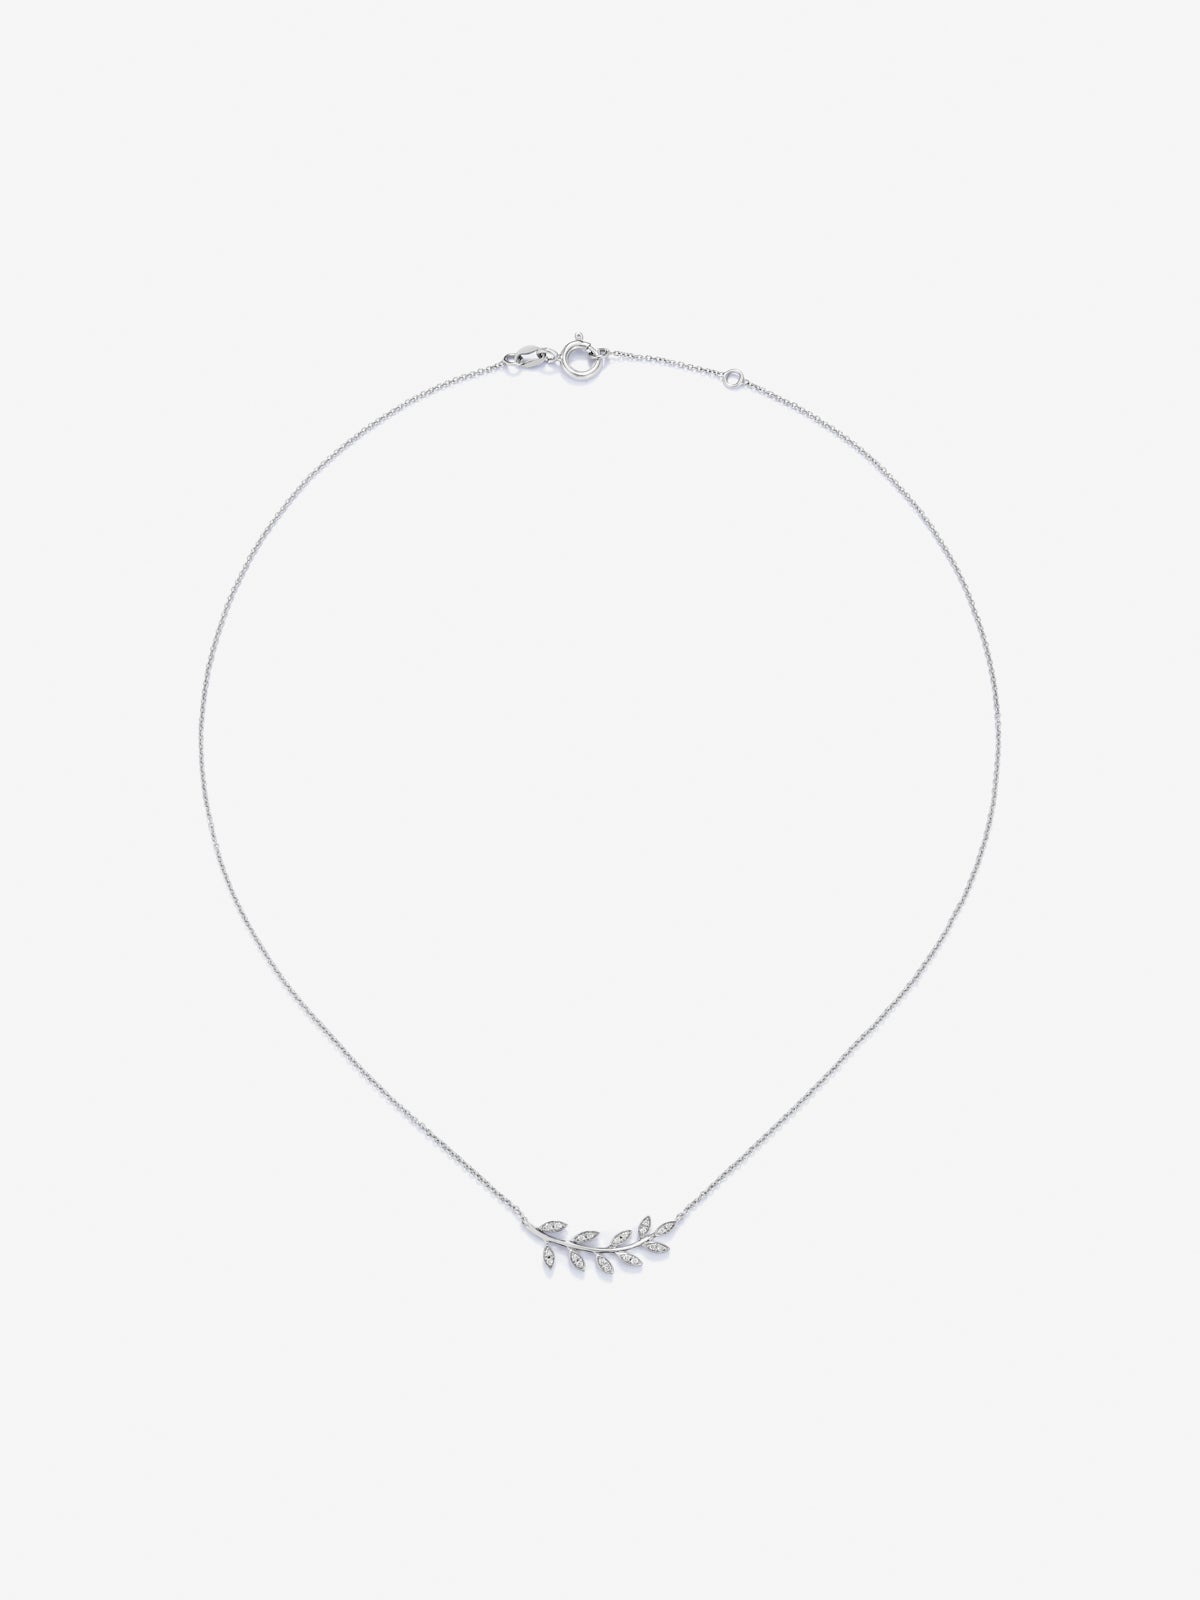 18K White Gold Leaf Pendant Chain with Diamond